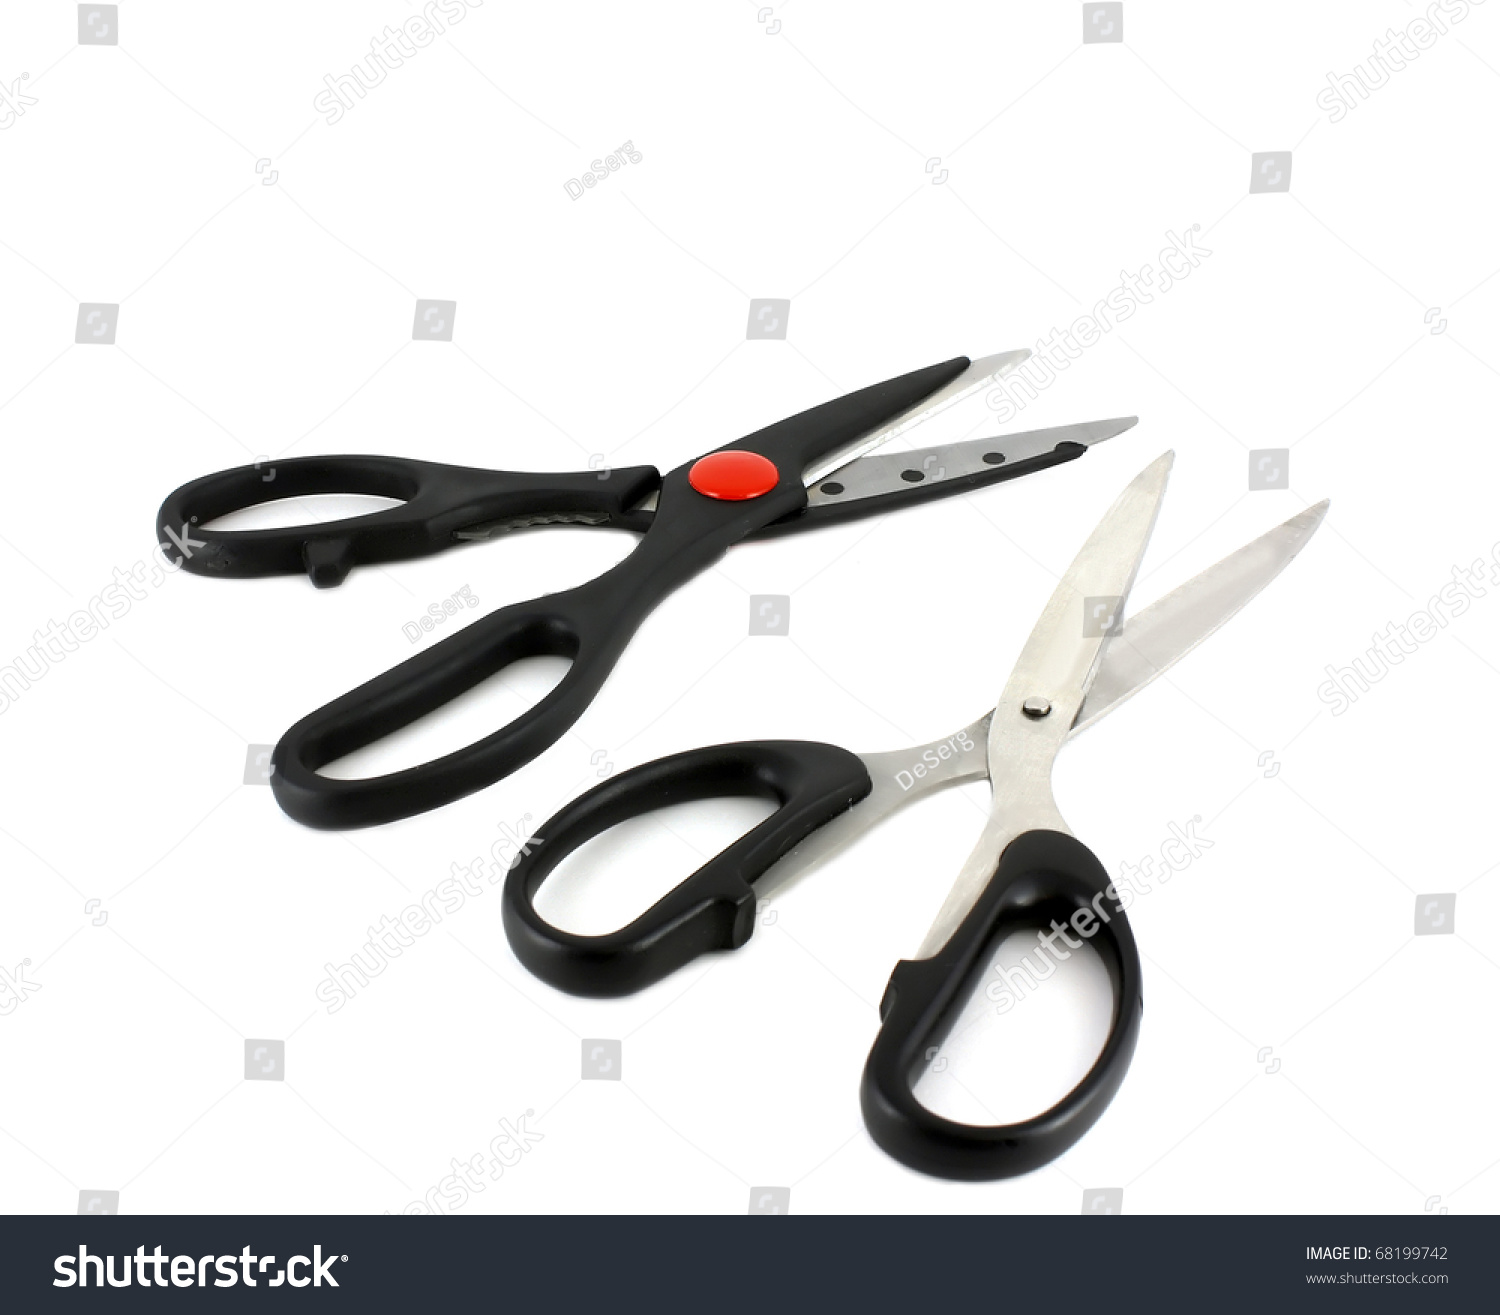 Two Kitchen Scissors Stock Photo 68199742 - Shutterstock